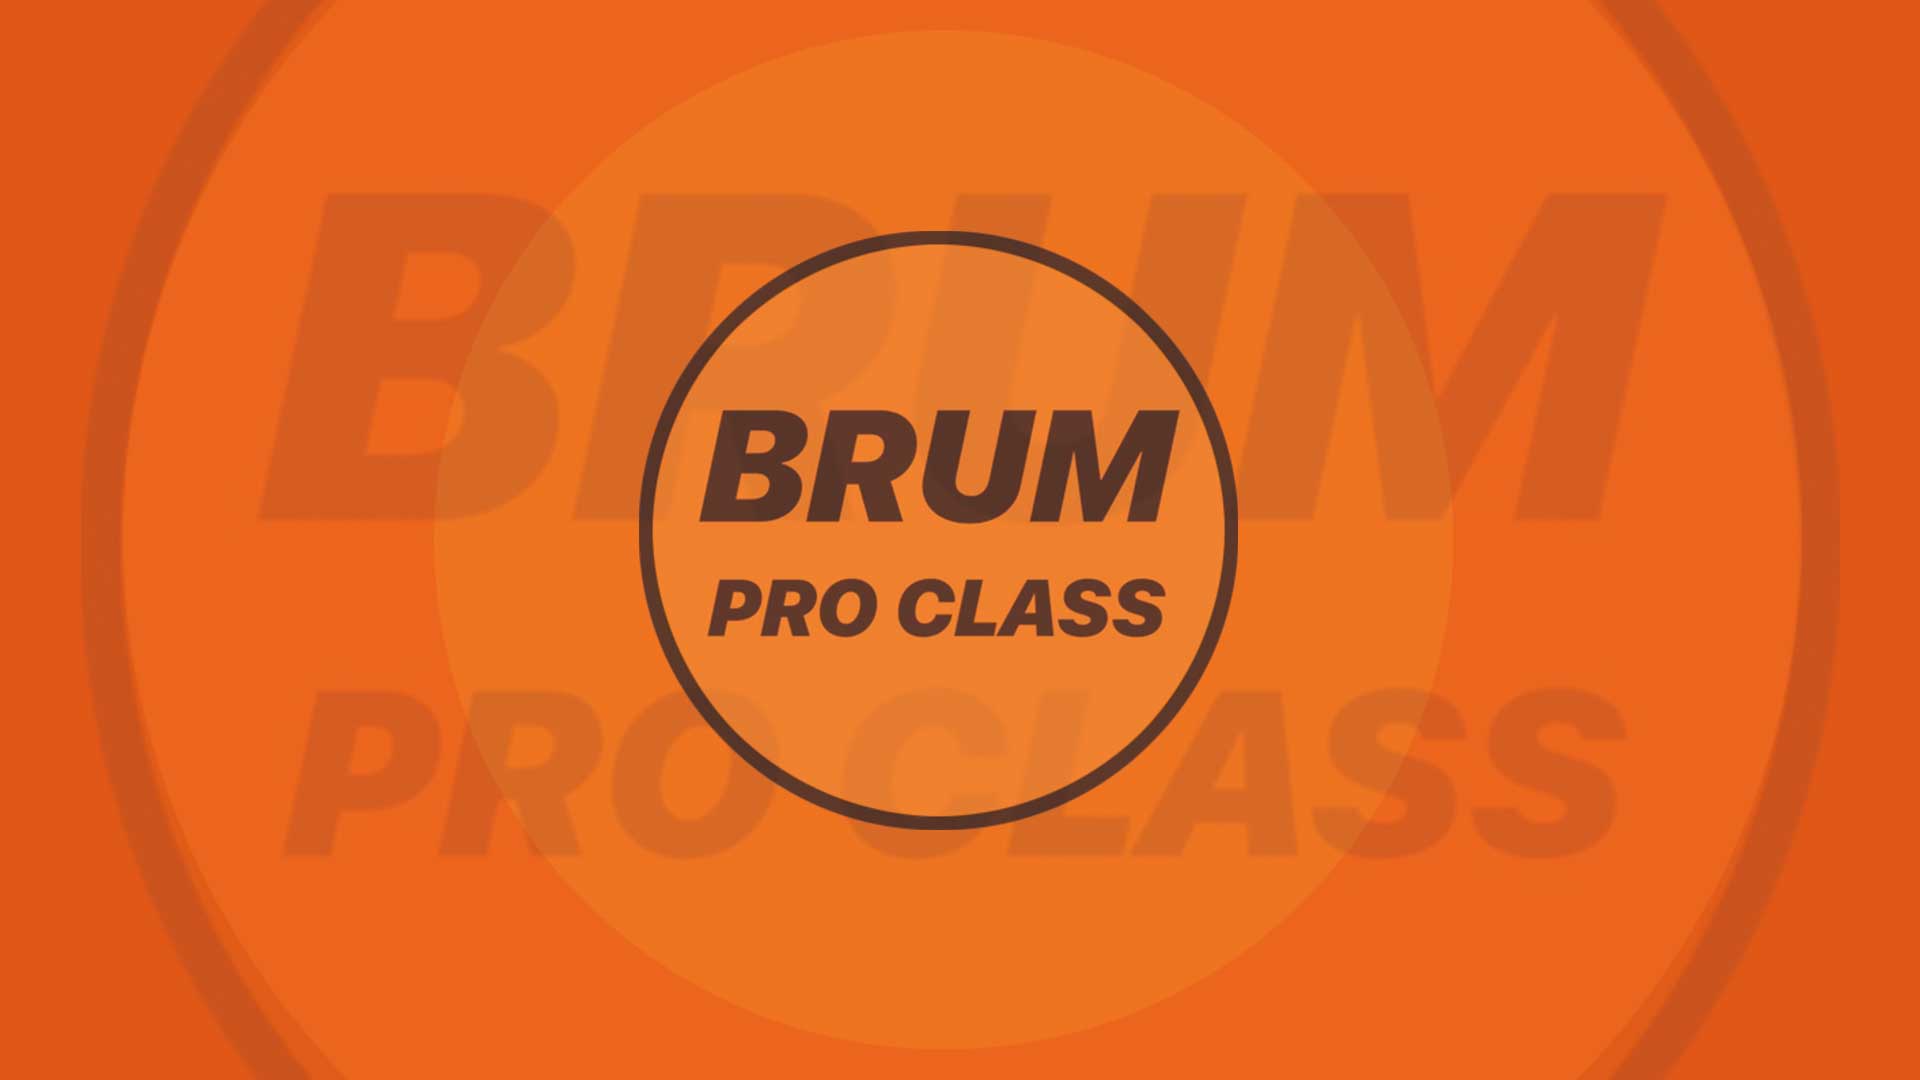 20 Mar 2023 – 10:00 @ FABRIC Brum Pro Class w/ Holly Jones